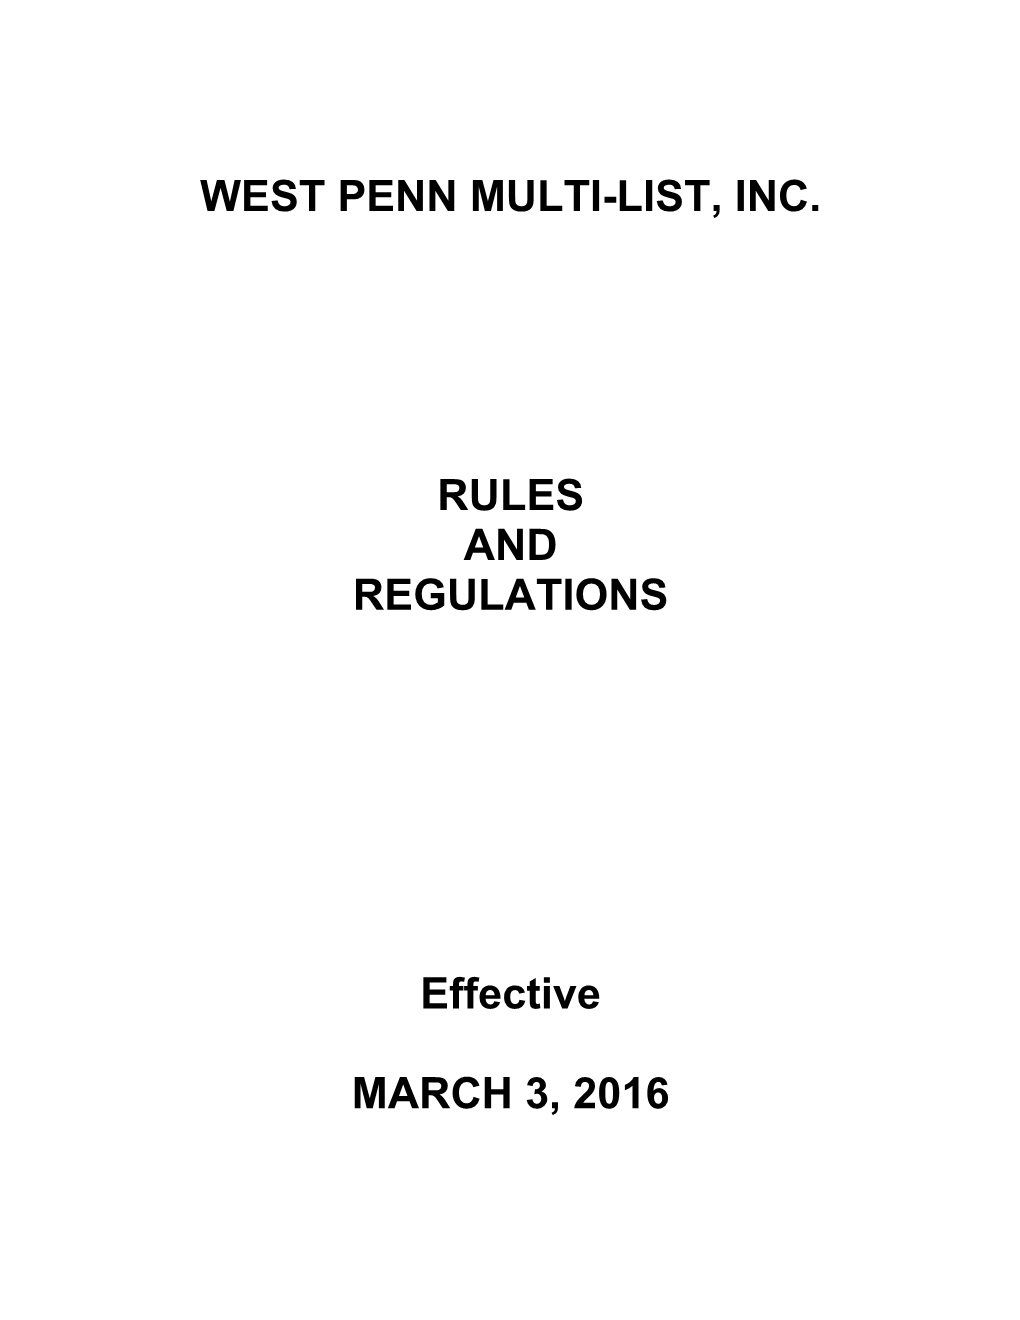 West Penn Multi-List, Inc. Rules and Regulations